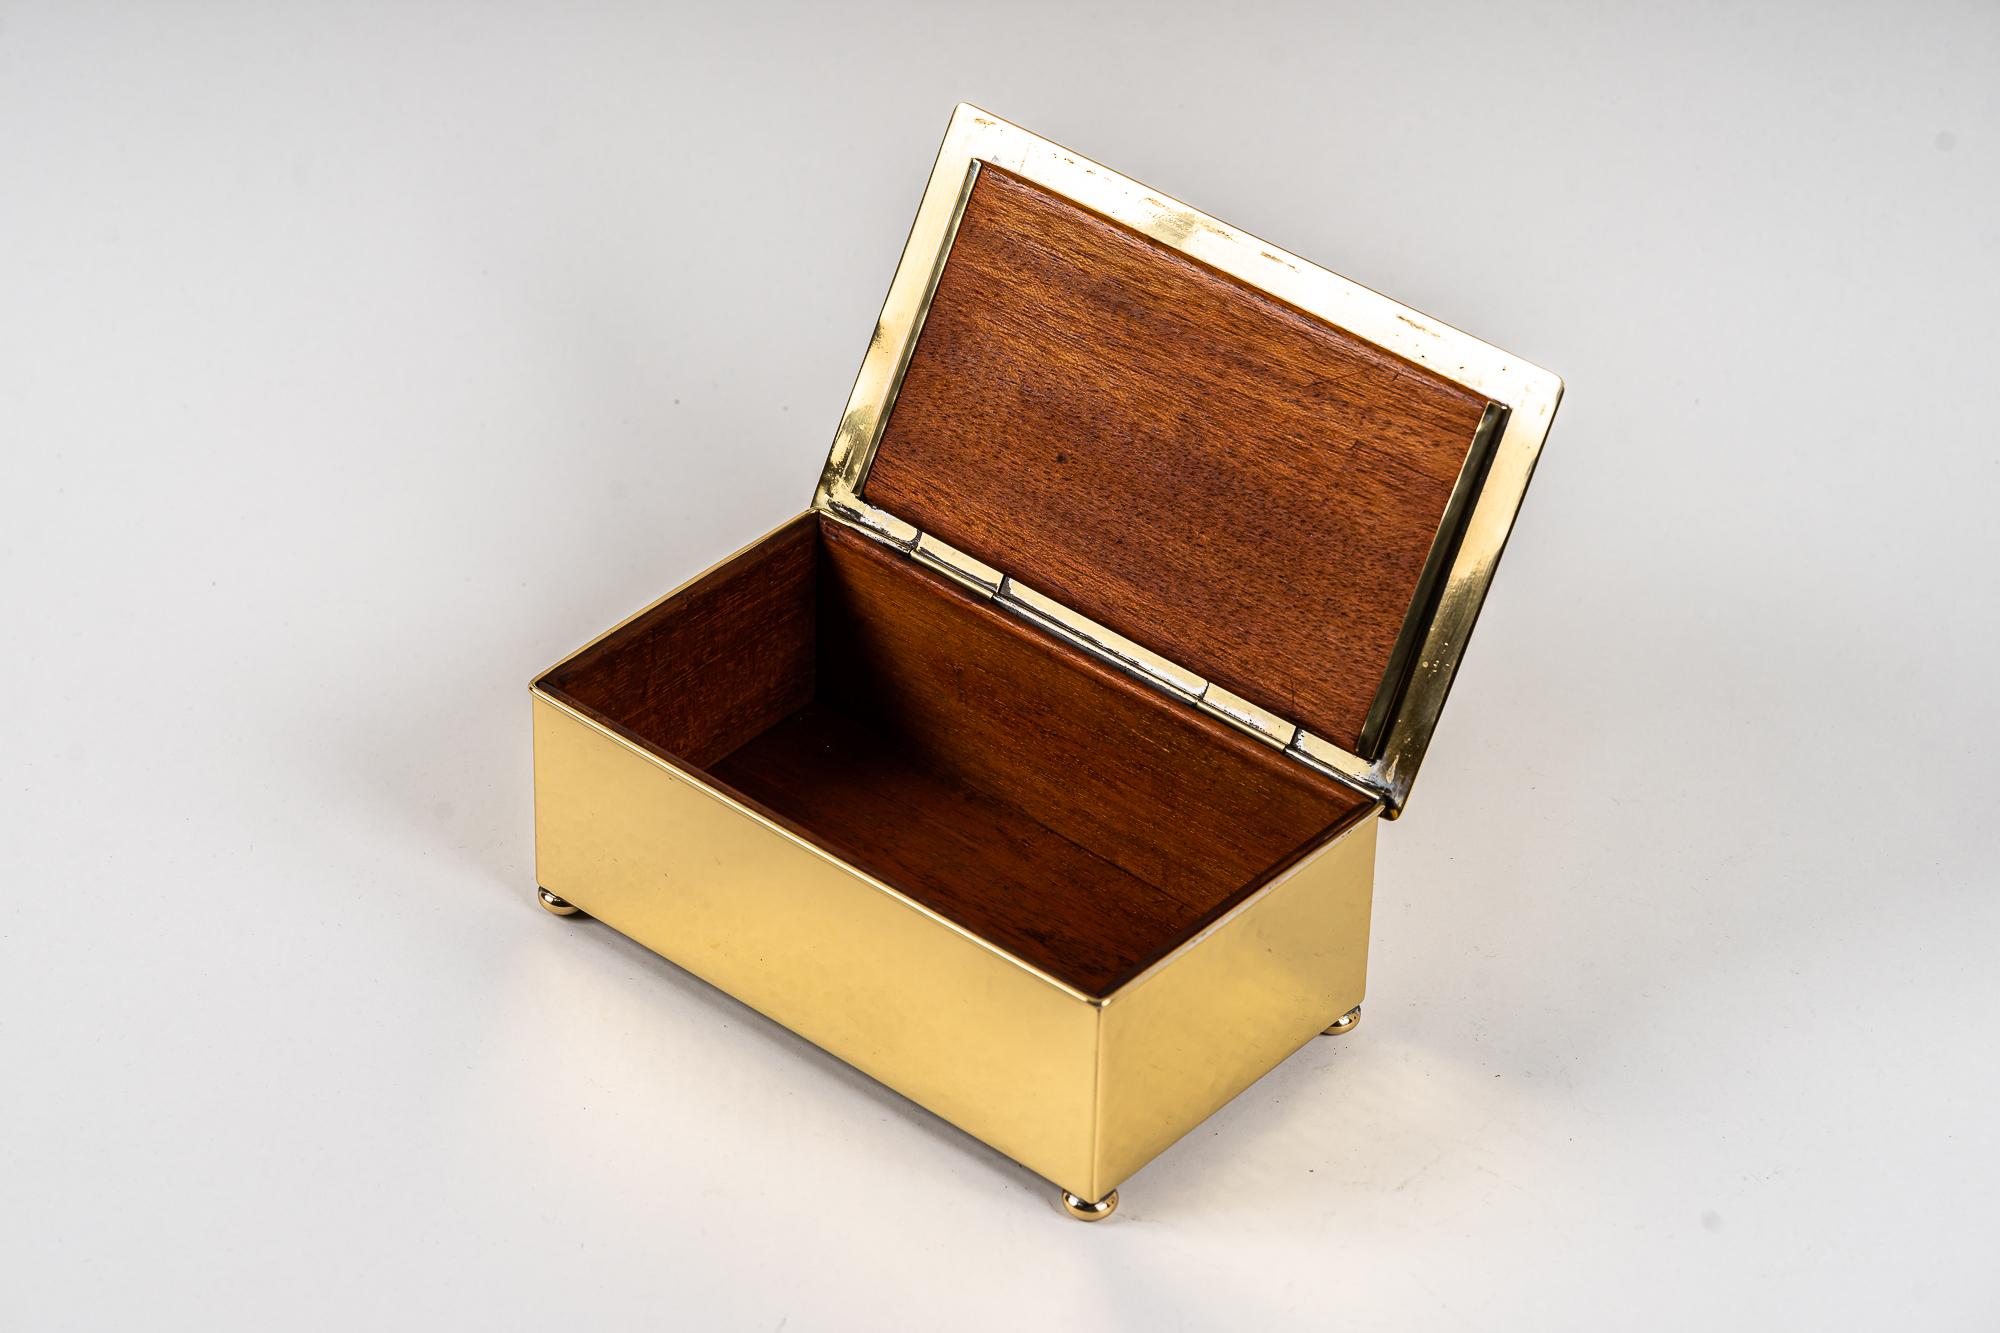 Early 20th Century Art Deco Brass Jewelry Box with Hunting Motiv Vienna around 1920s